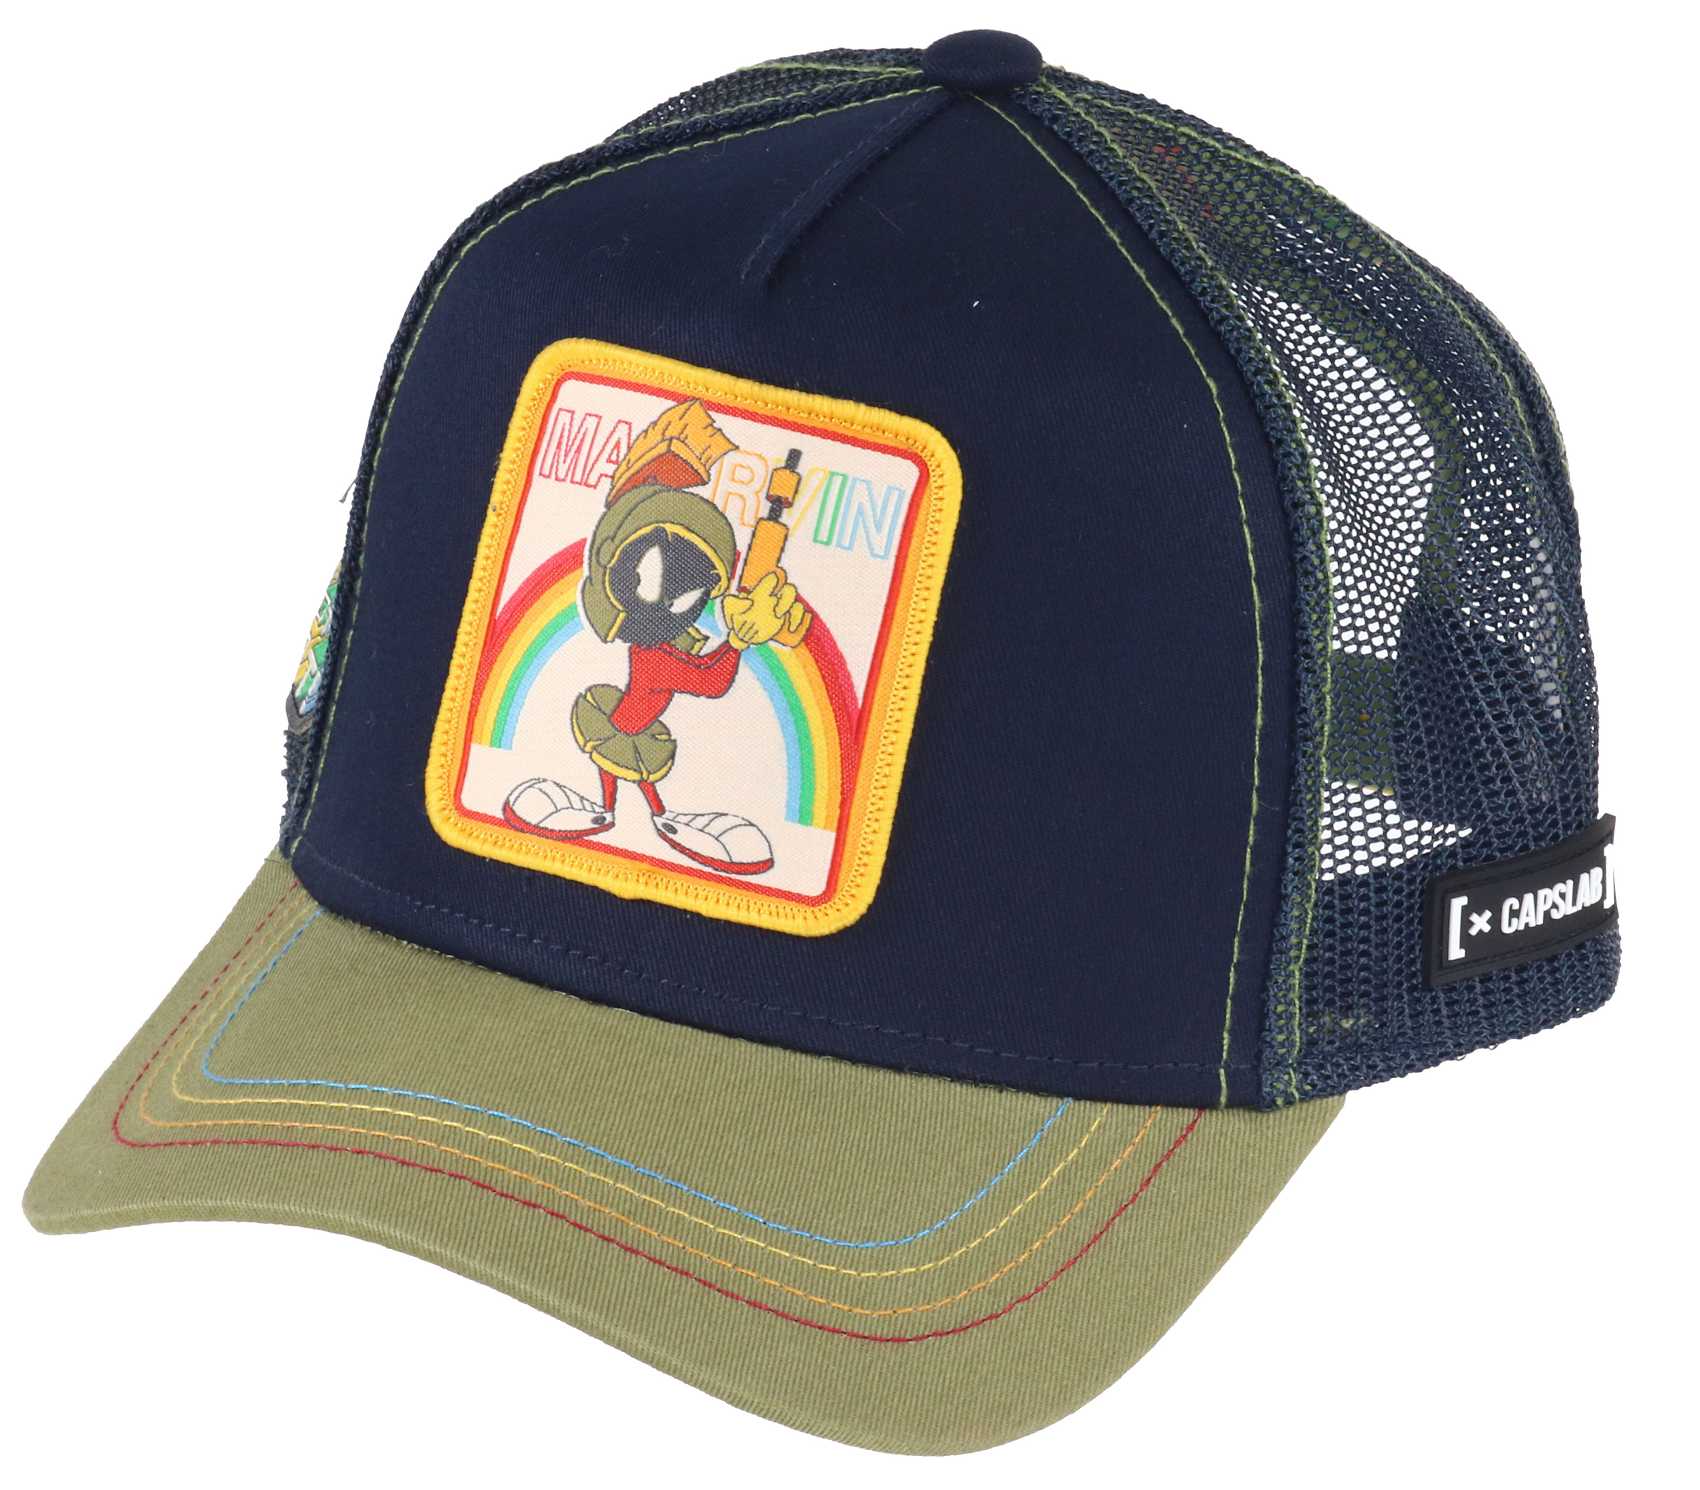 Marvin the Martian Looney Tunes Trucker Cap Capslab